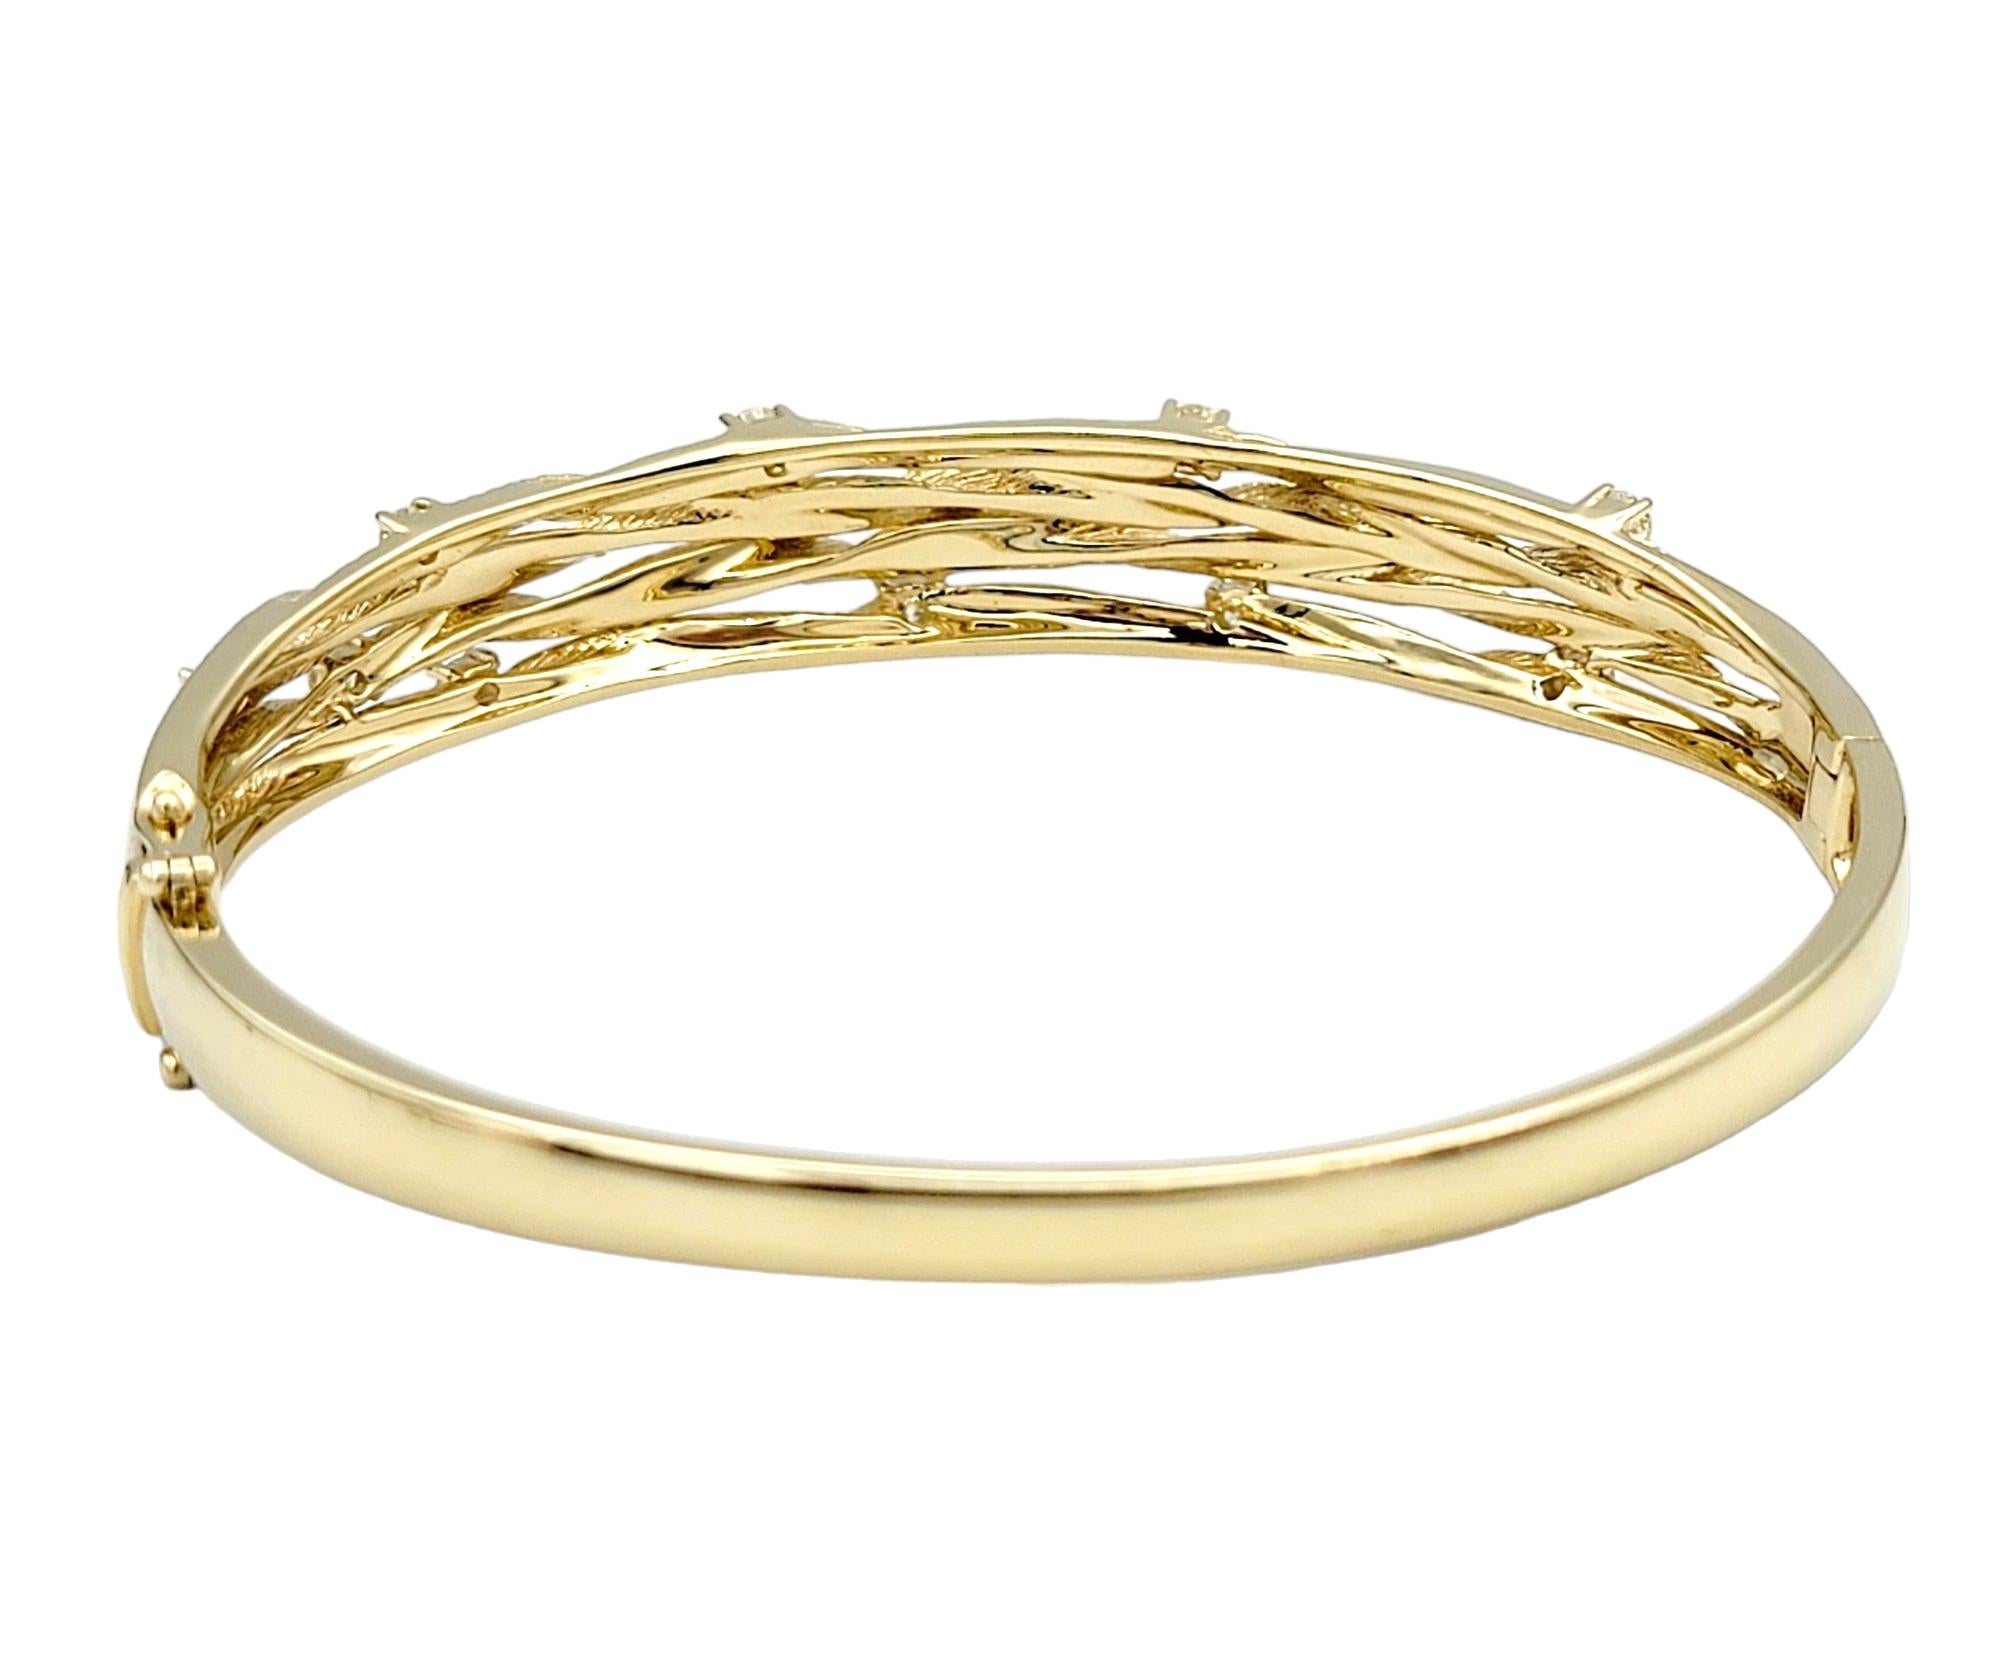 Round Cut Effy D'oro Diamond Twisted Rope Design Bangle Bracelet in 14 Karat Yellow Gold